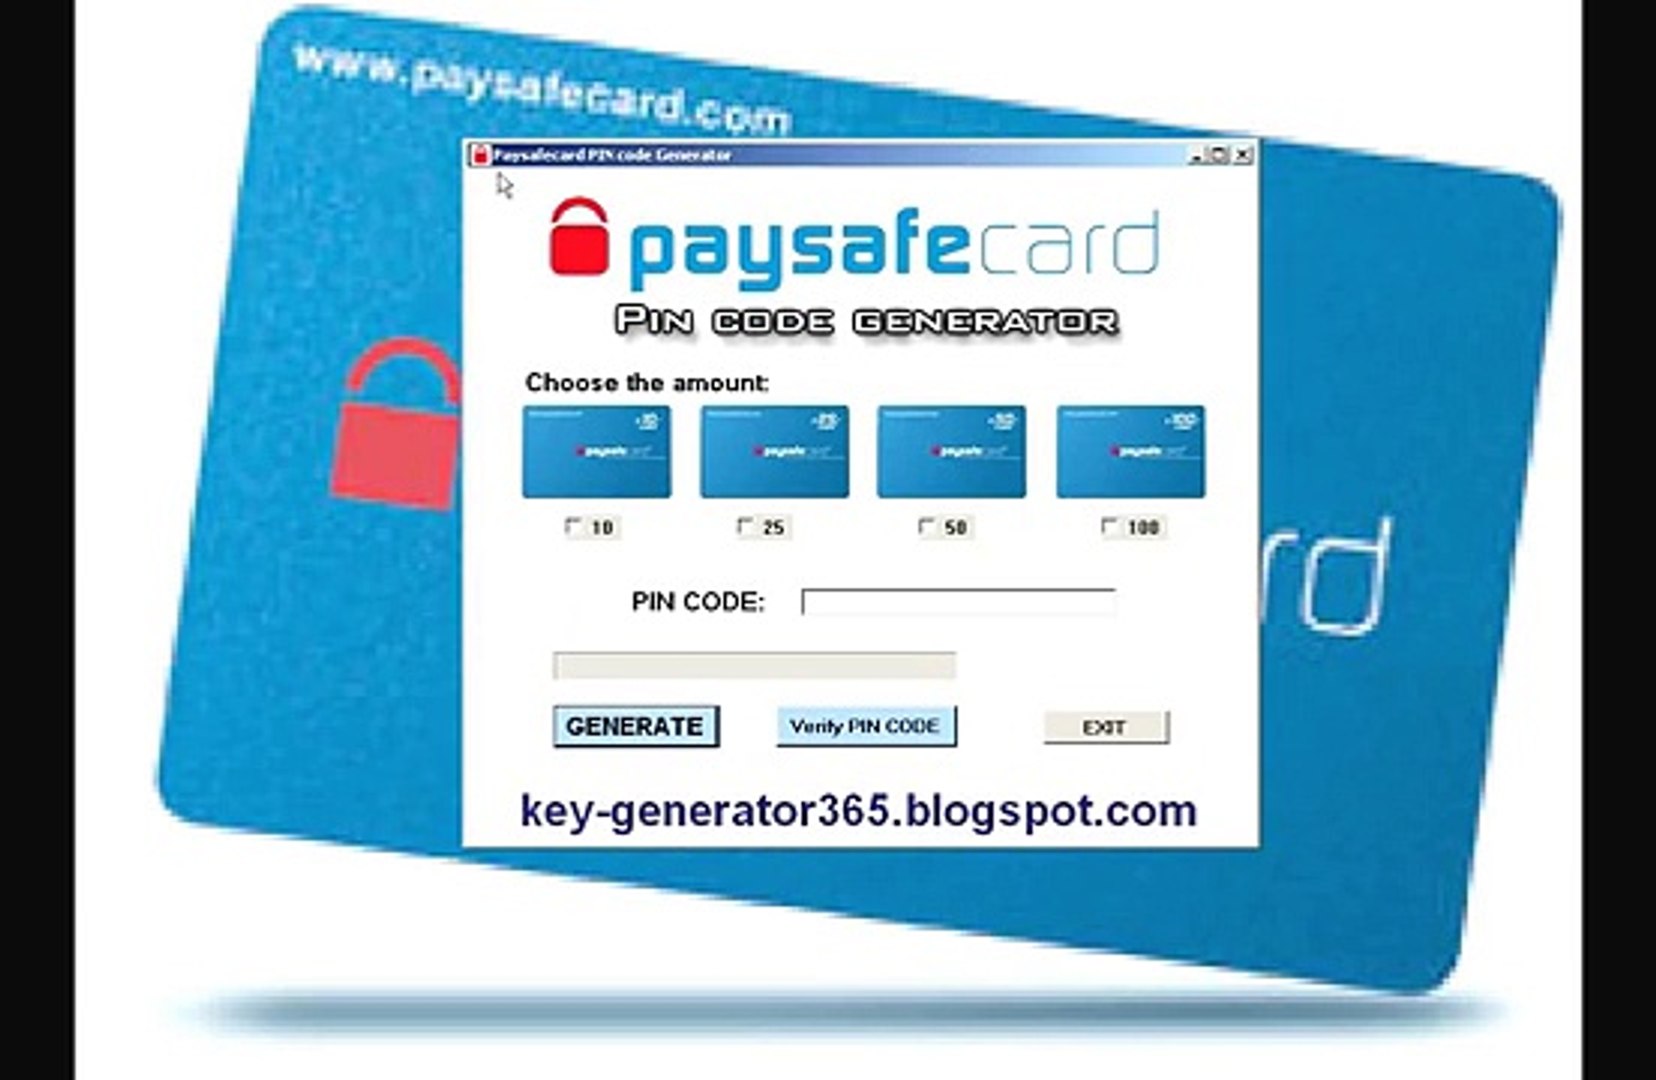 Paysafecard code generator 2014 Paysafecard pin codes - video Dailymotion